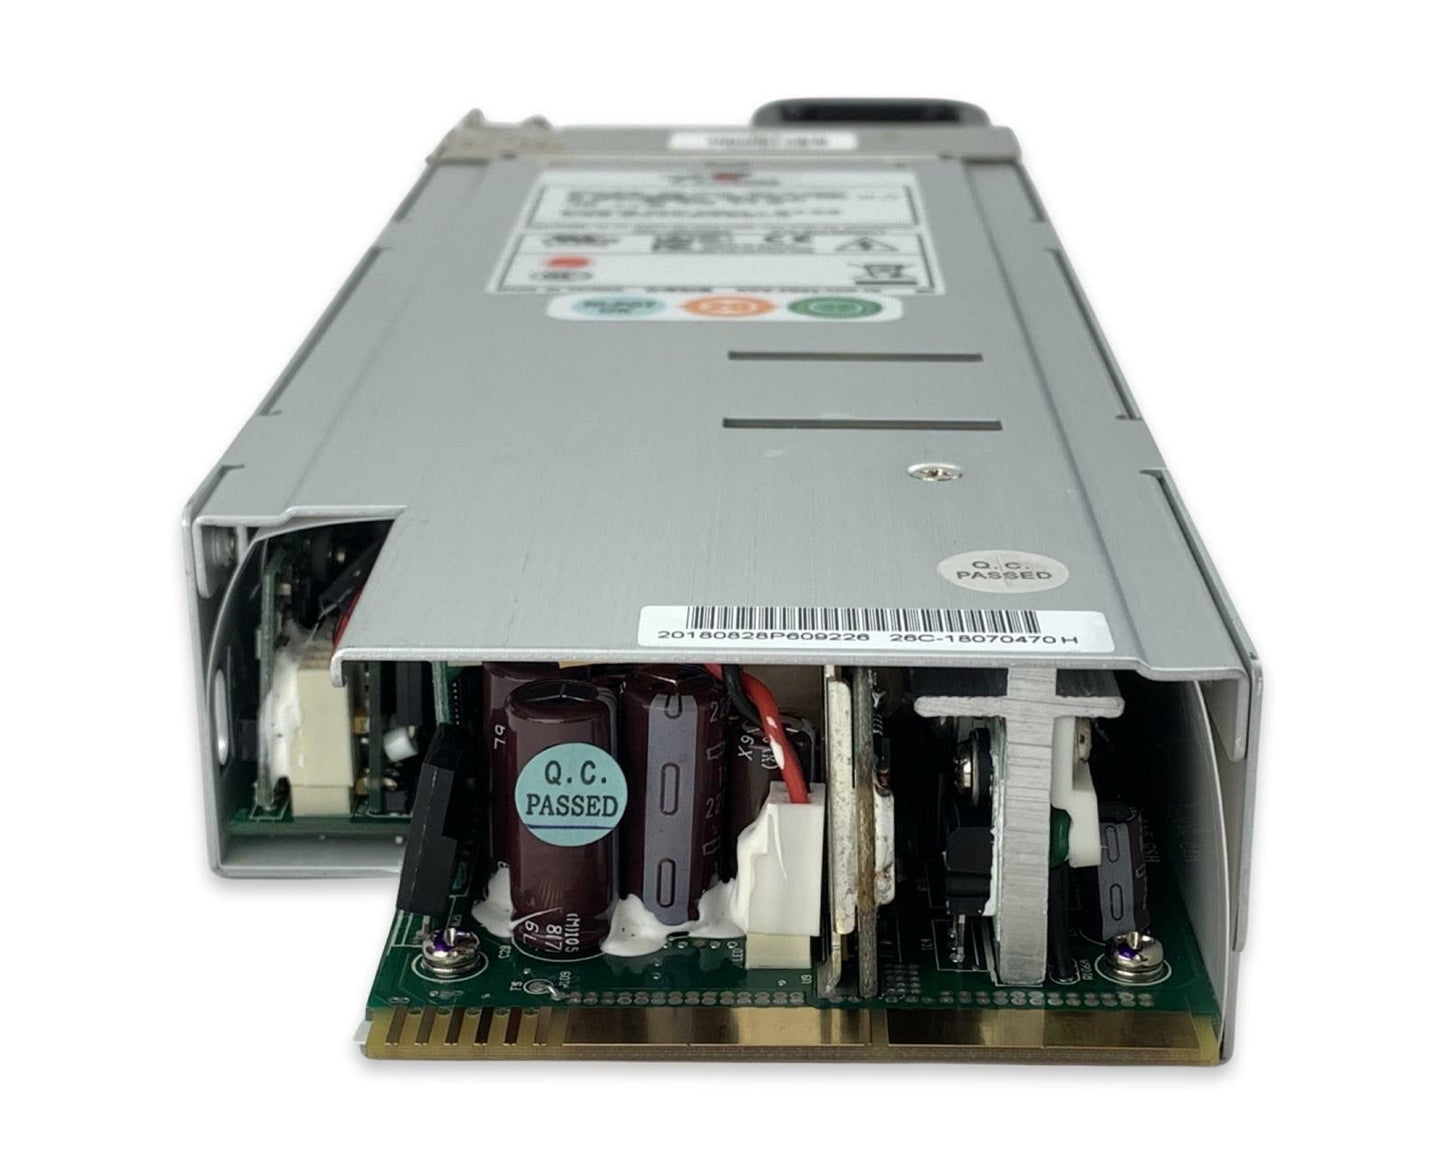 EMACS G1W-3960V 960W Switching Server Power Supply PSU